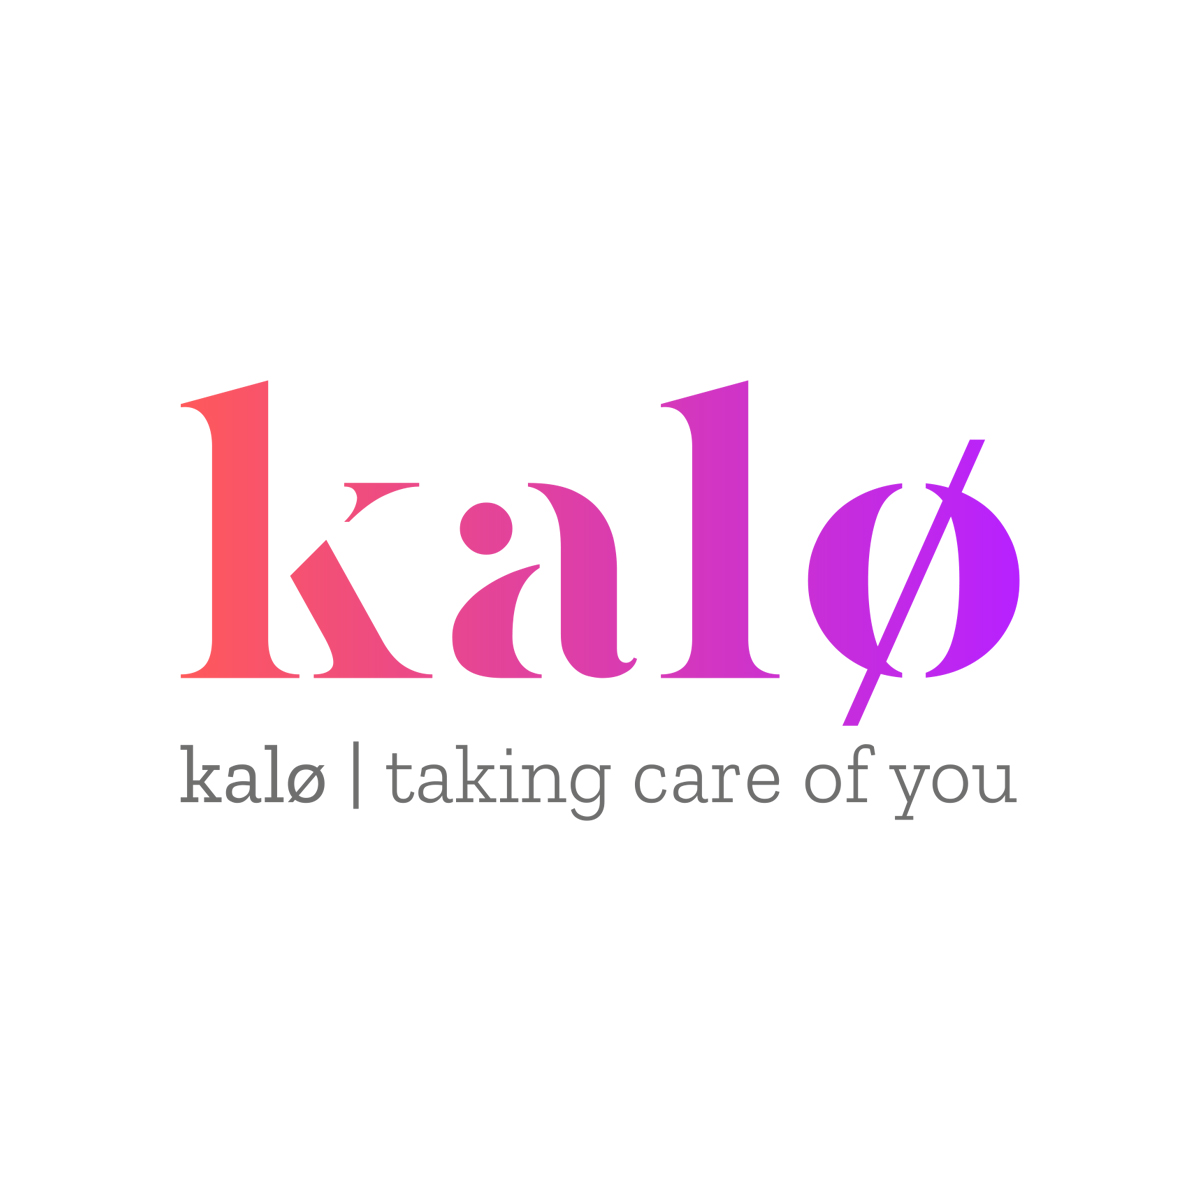 naming branding y packaging de productos kalo by UMM ideas SA.